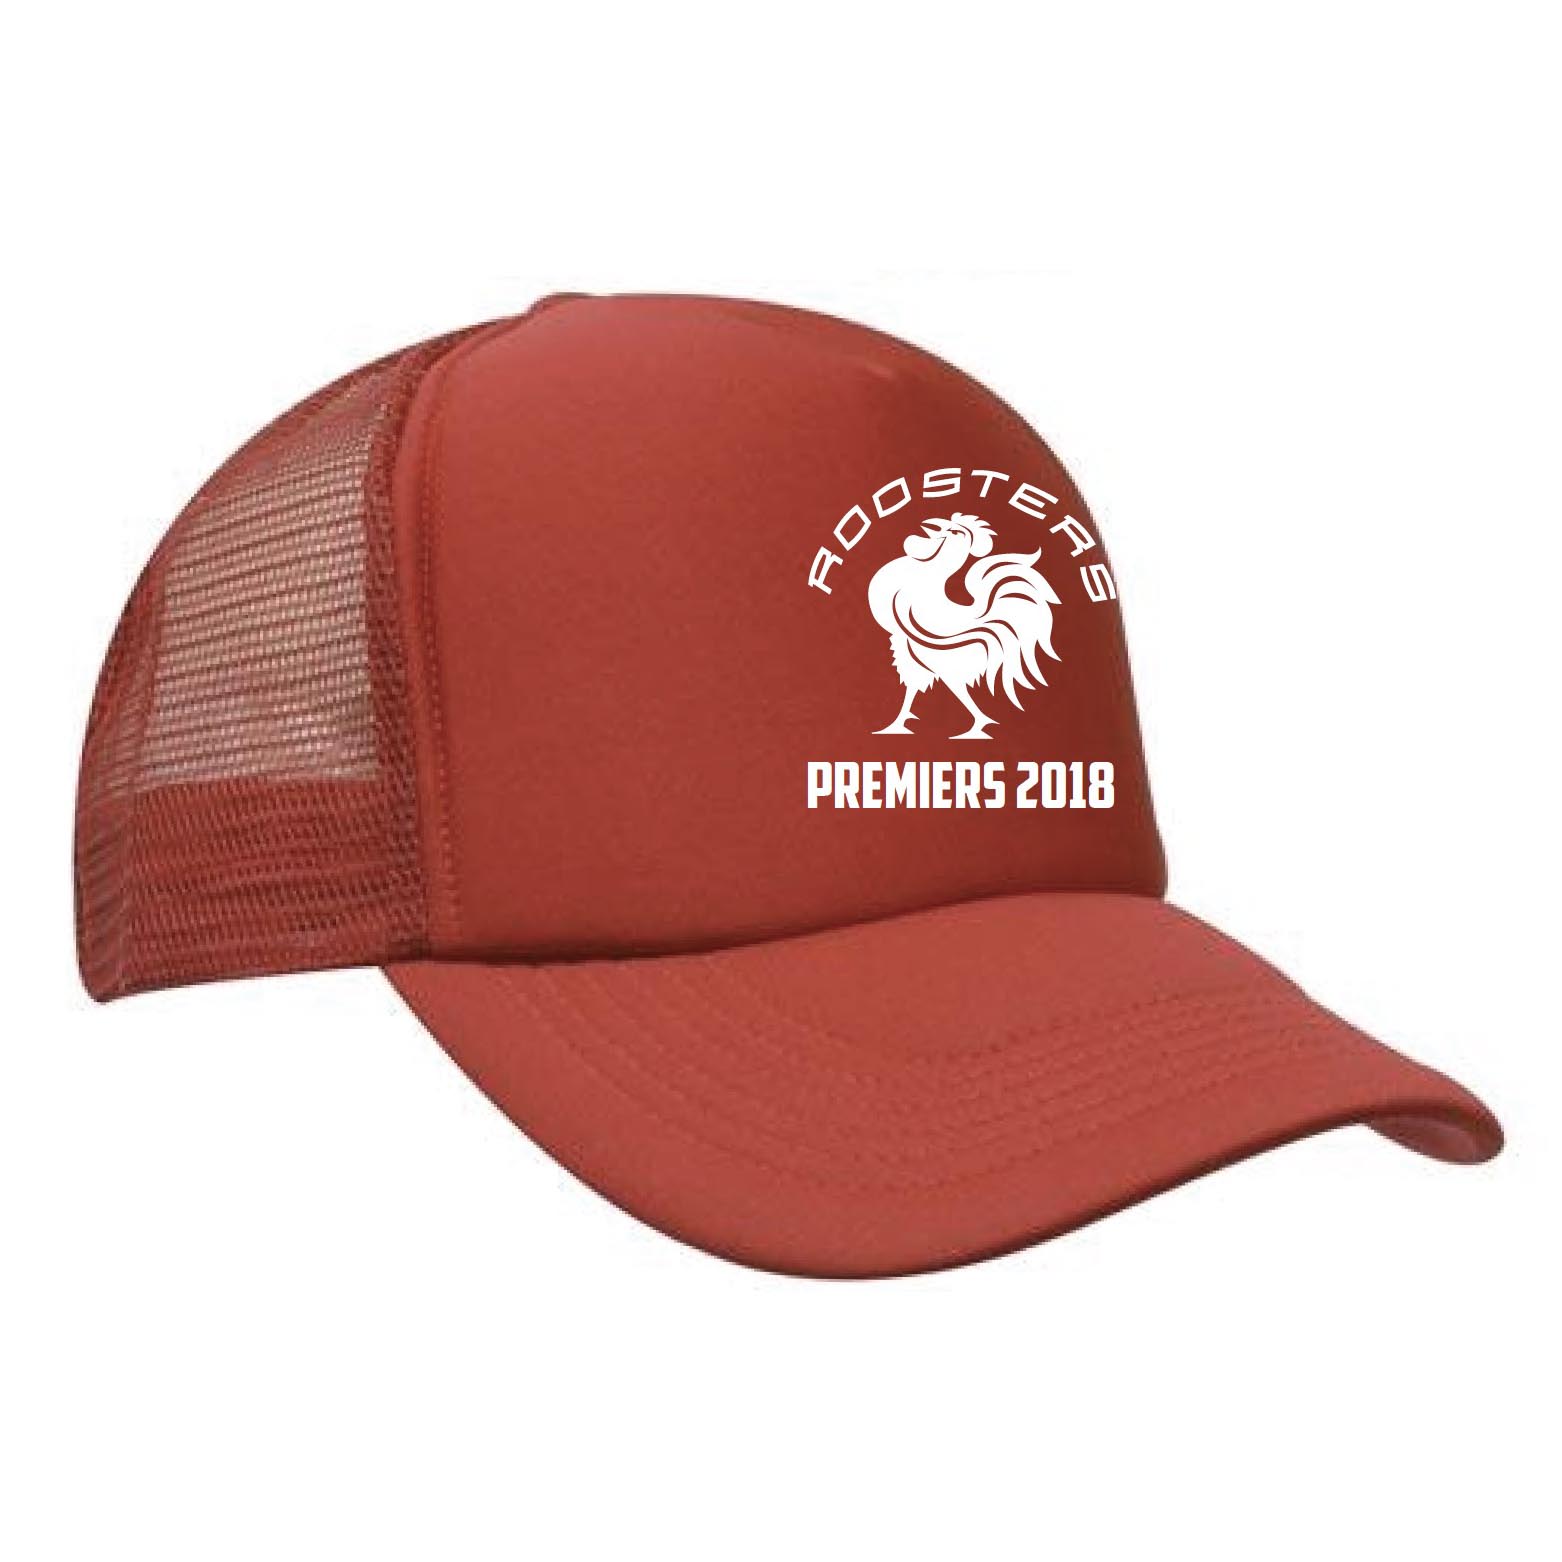 NAFC ROOSTERS PREMIERS TRUCKER CAP RED